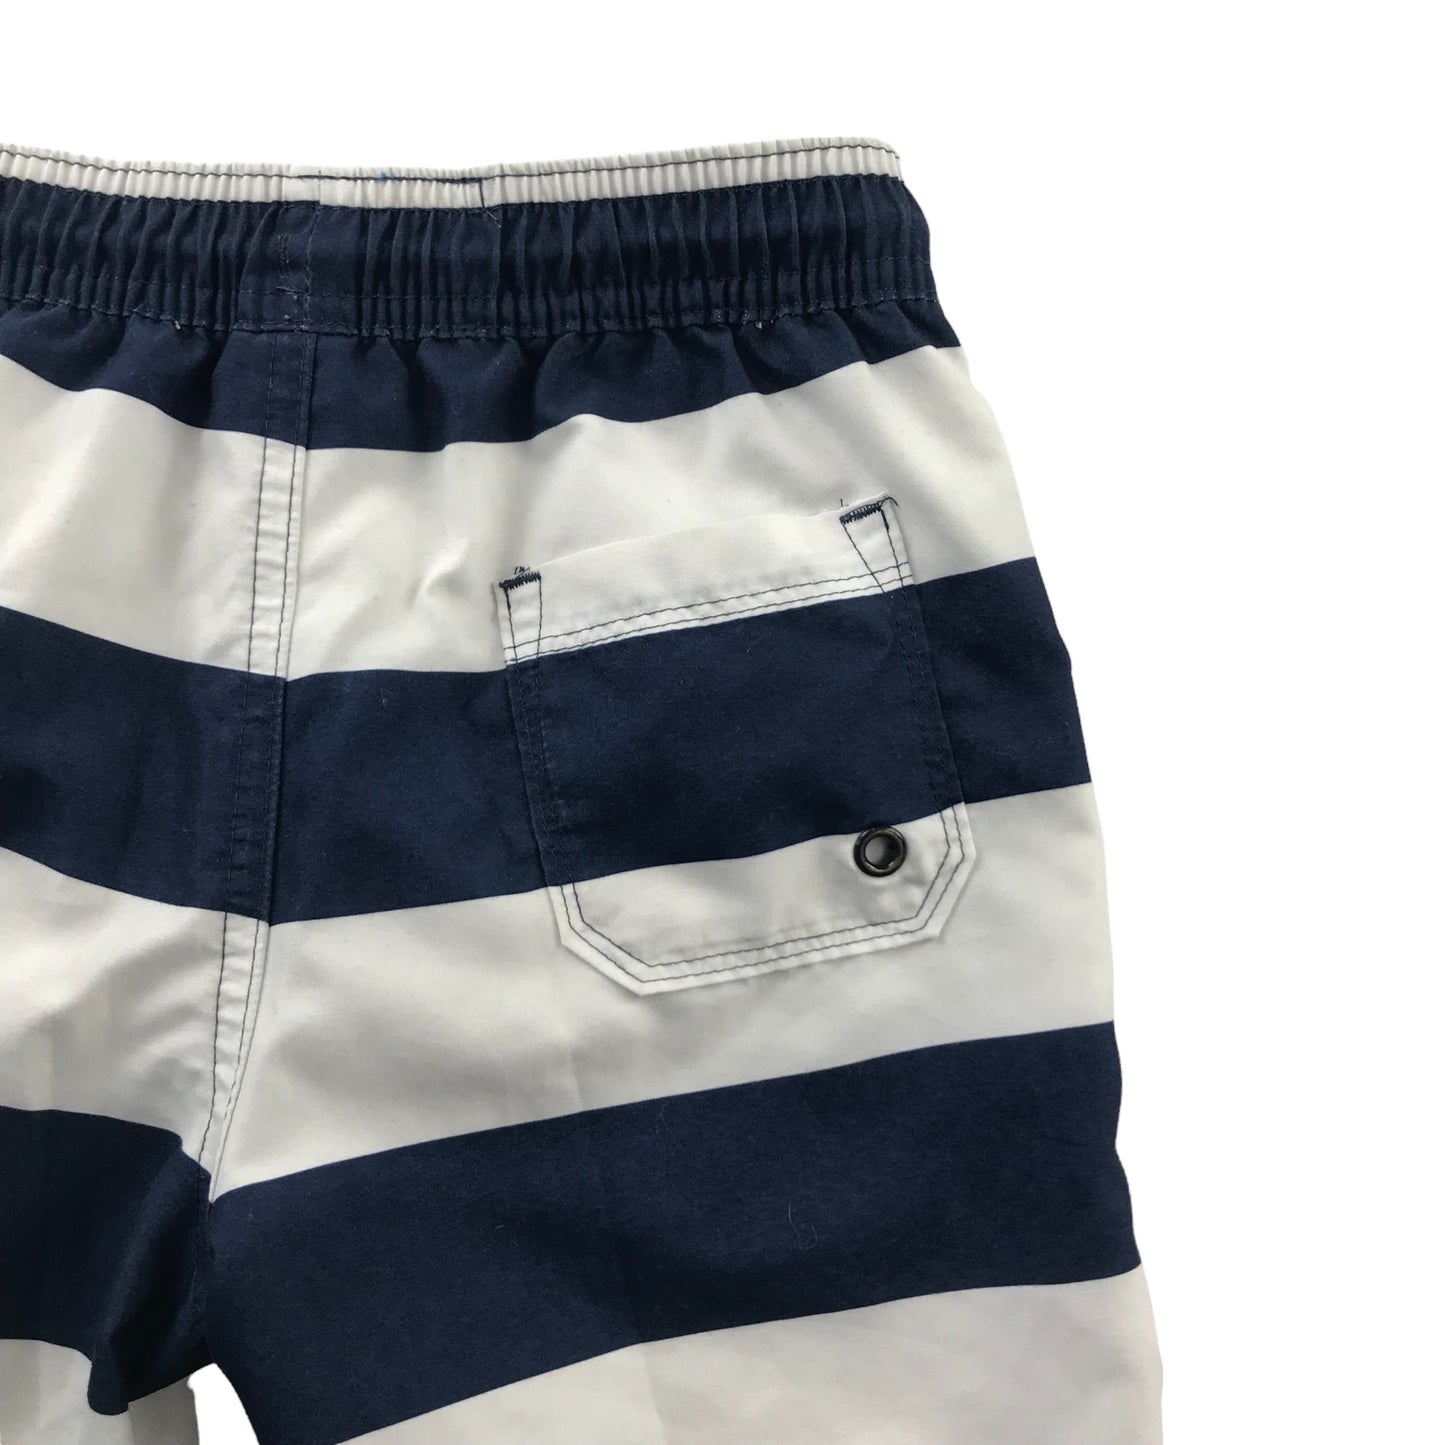 M&S Swim Trunks Age 4 Navy Blue White Stripes Shorts